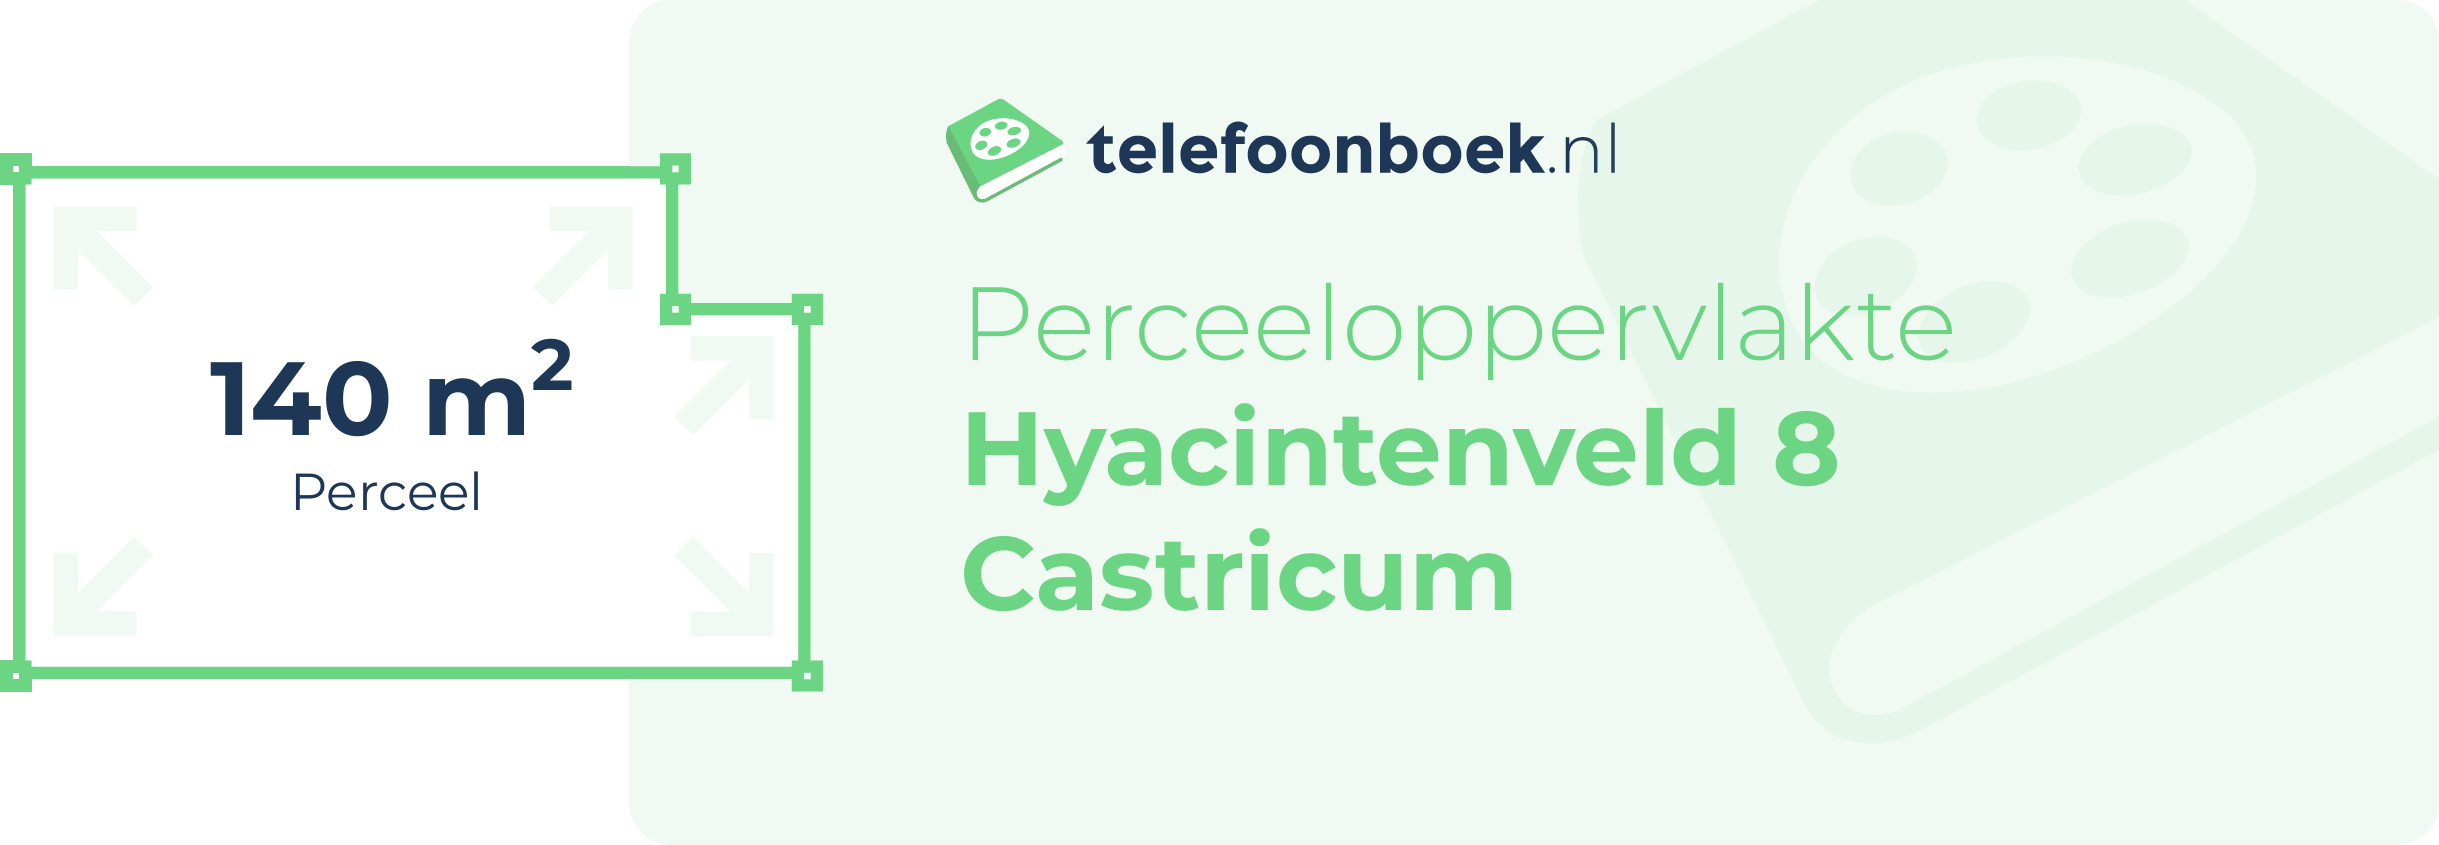 Perceeloppervlakte Hyacintenveld 8 Castricum